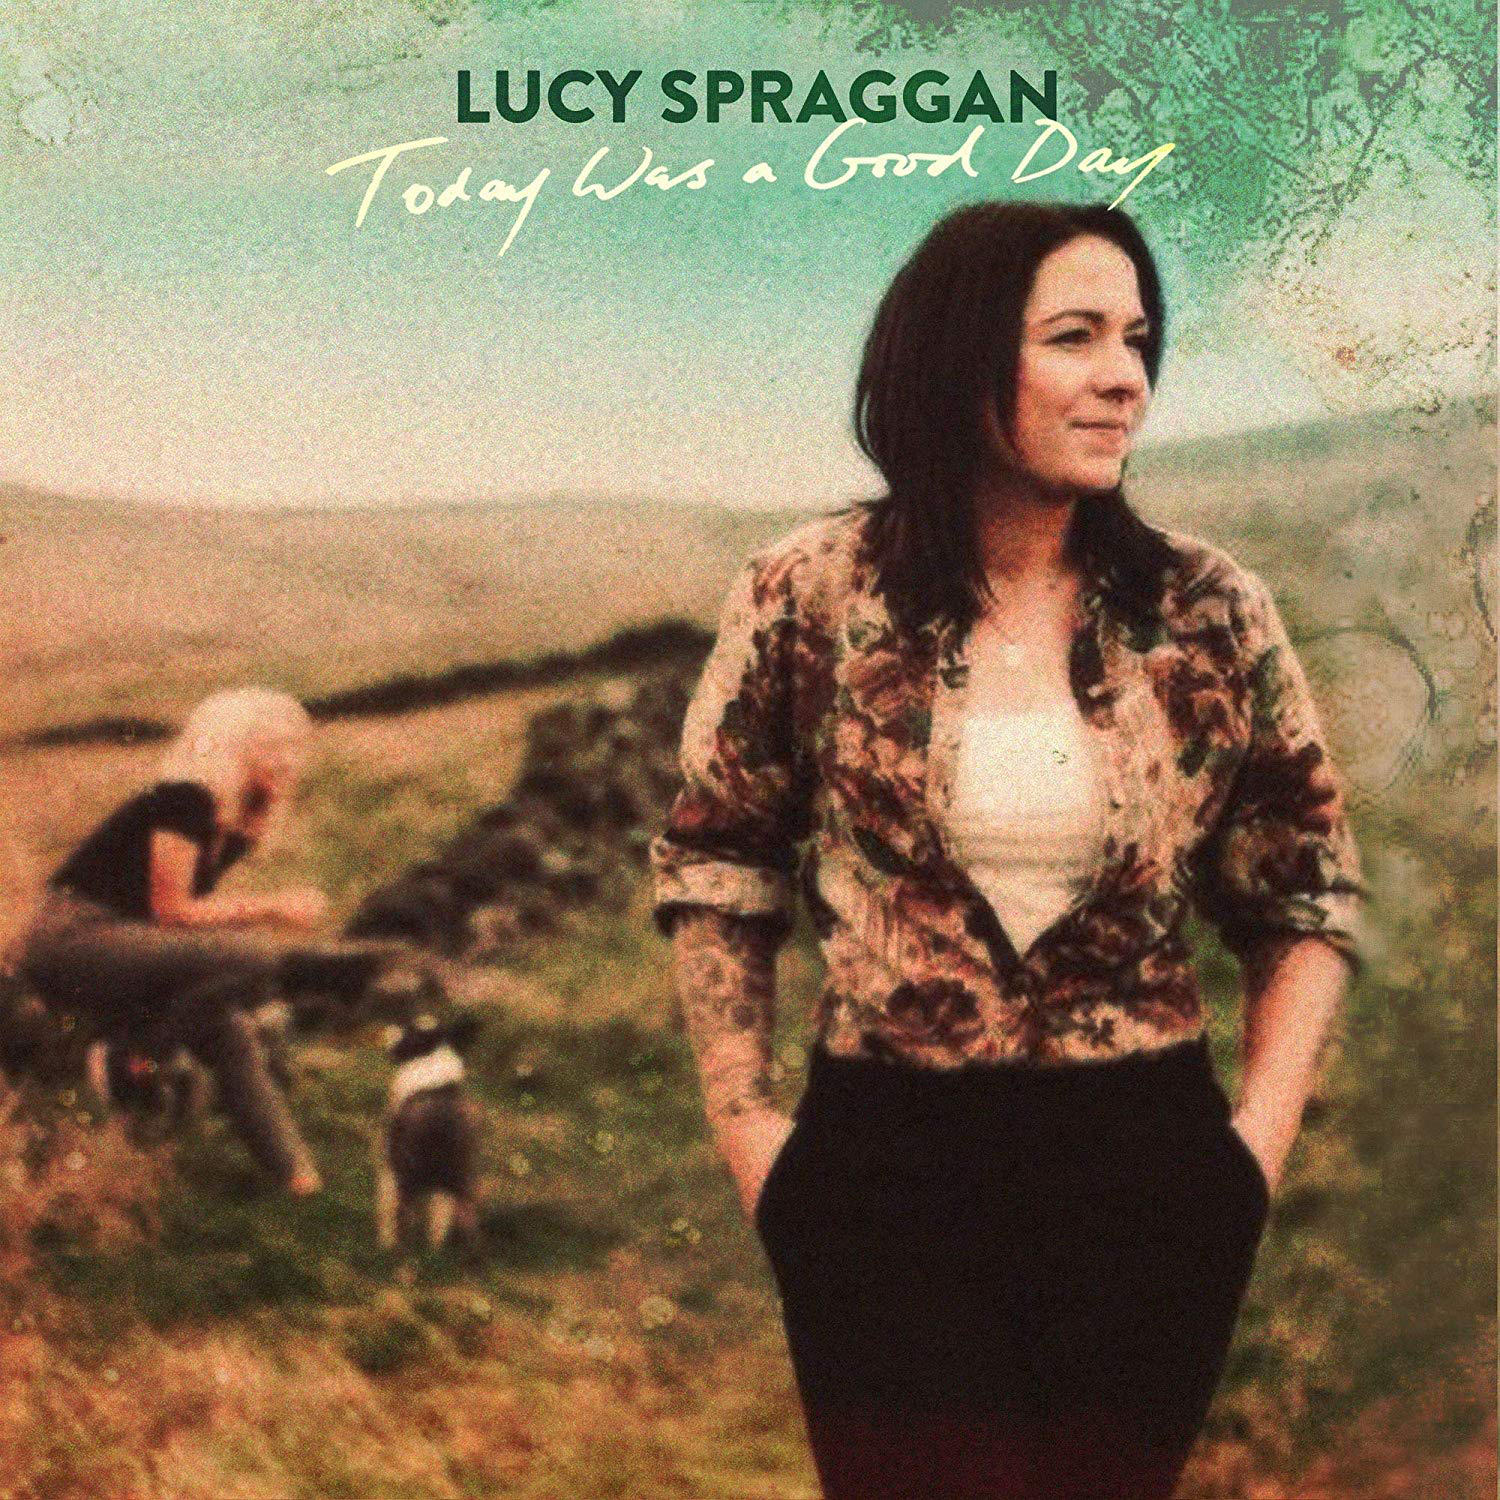 Lucy Spraggan - Today Was - A (Vinyl) Good Day